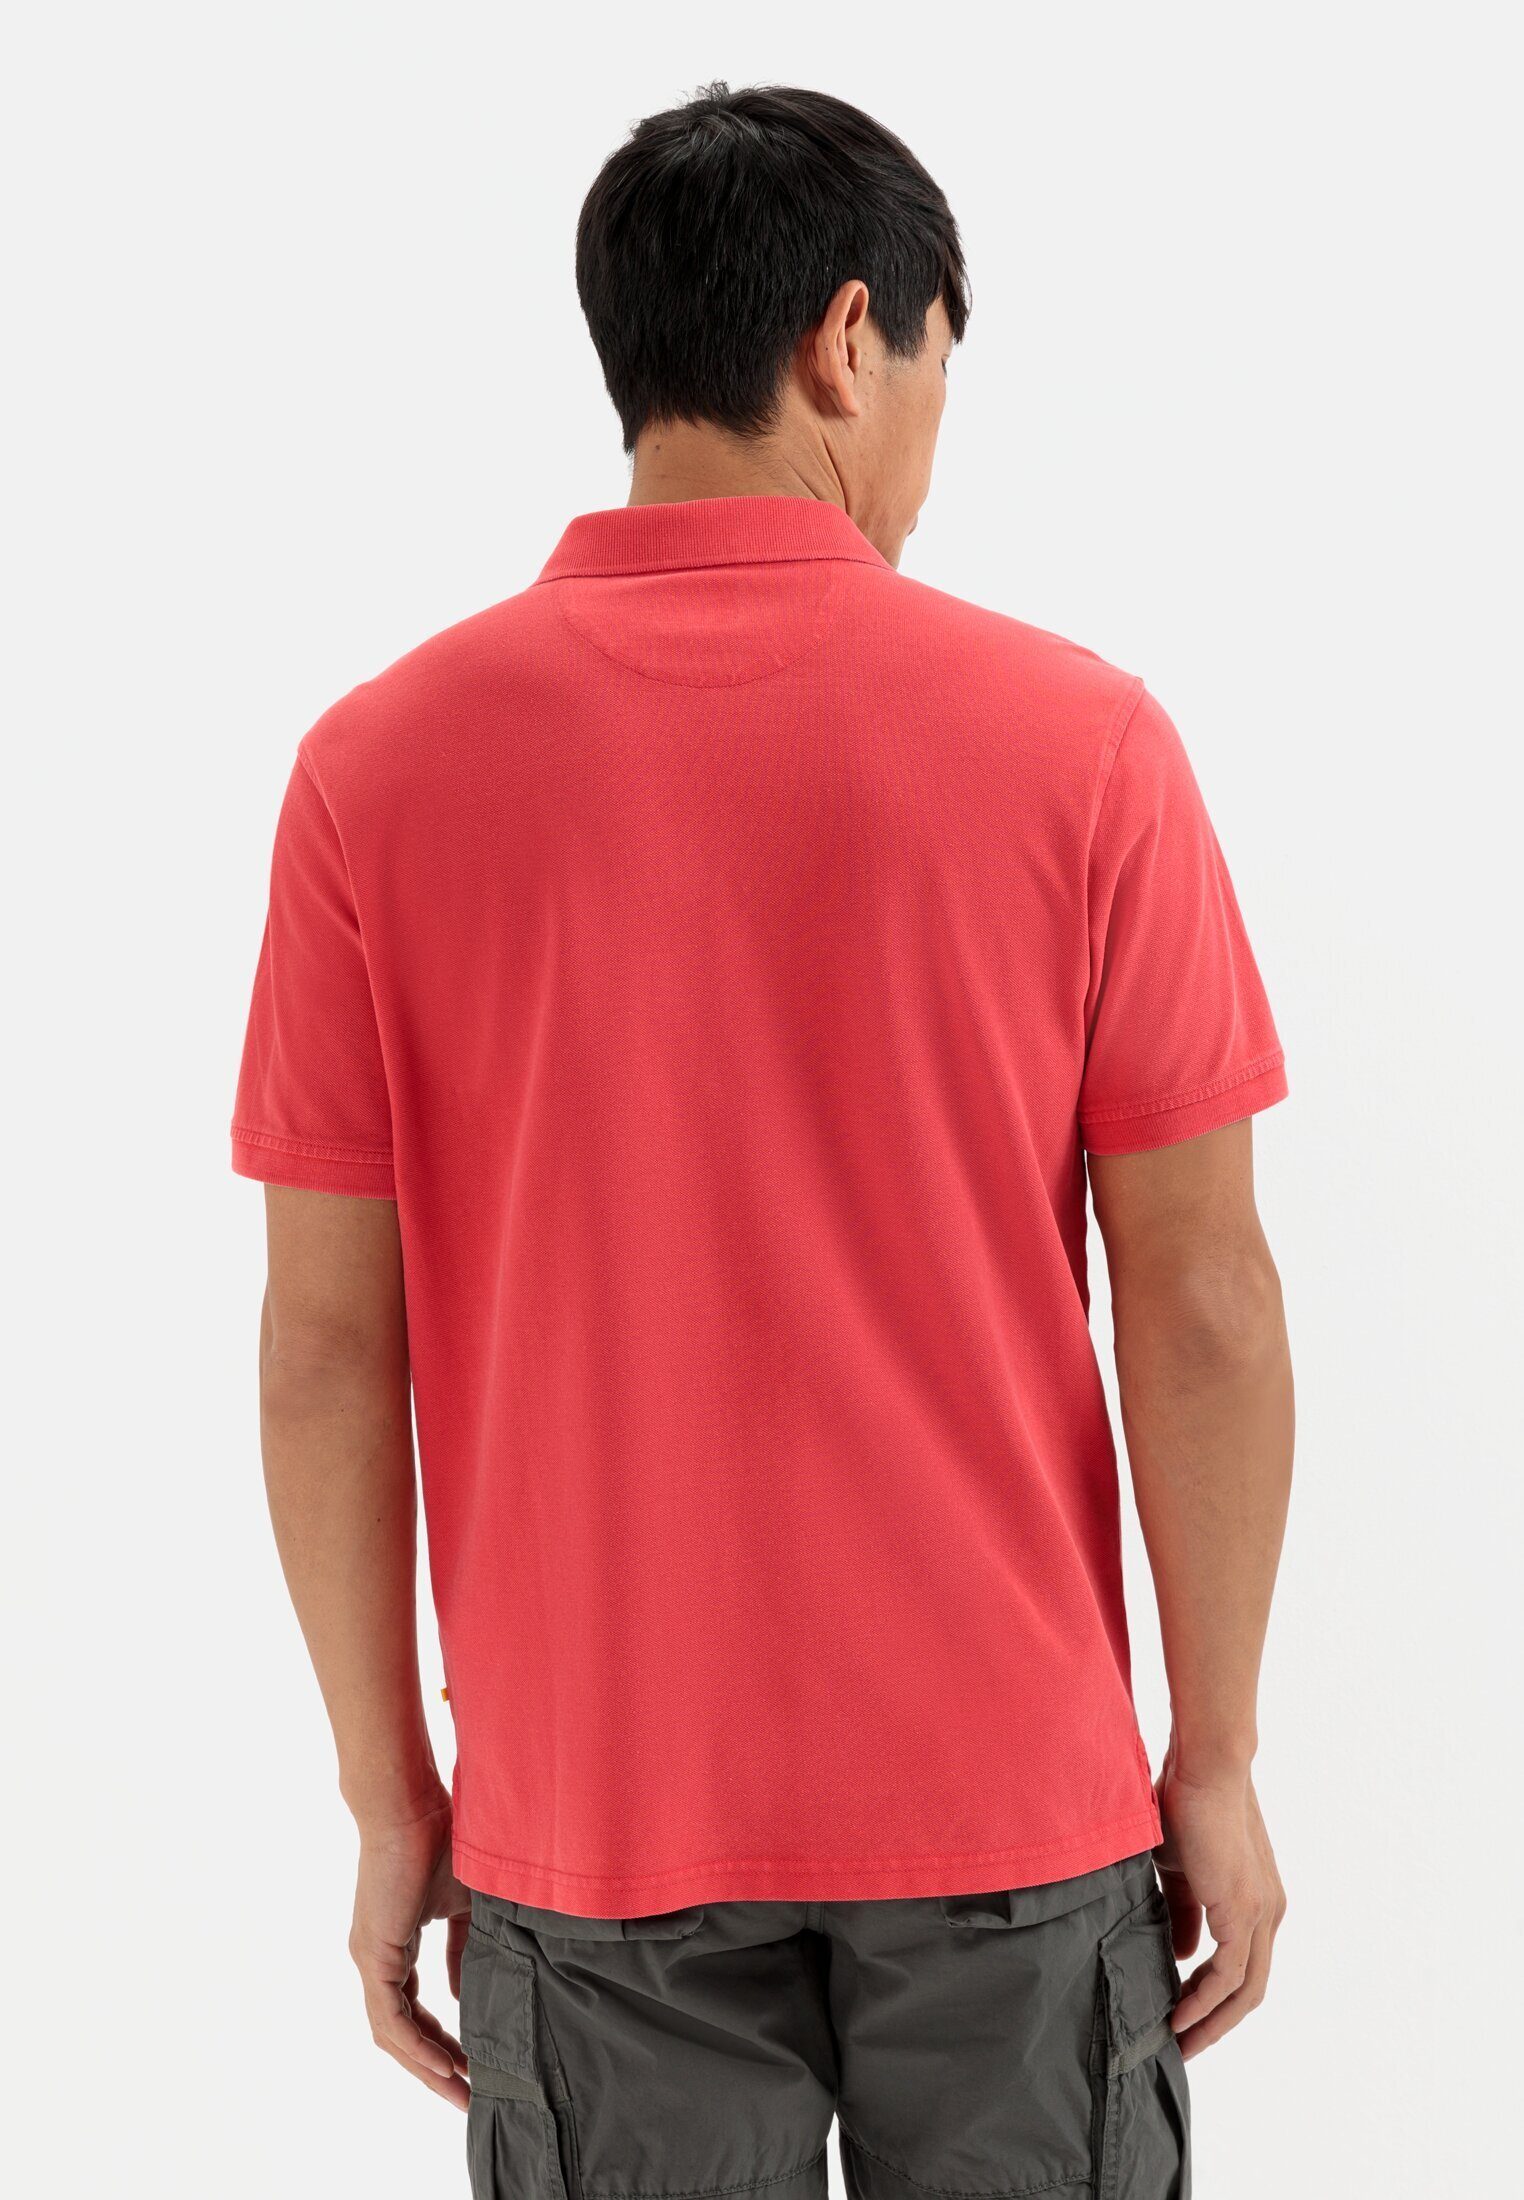 active reiner aus Poloshirt Baumwolle Shirts_Poloshirt camel Rot